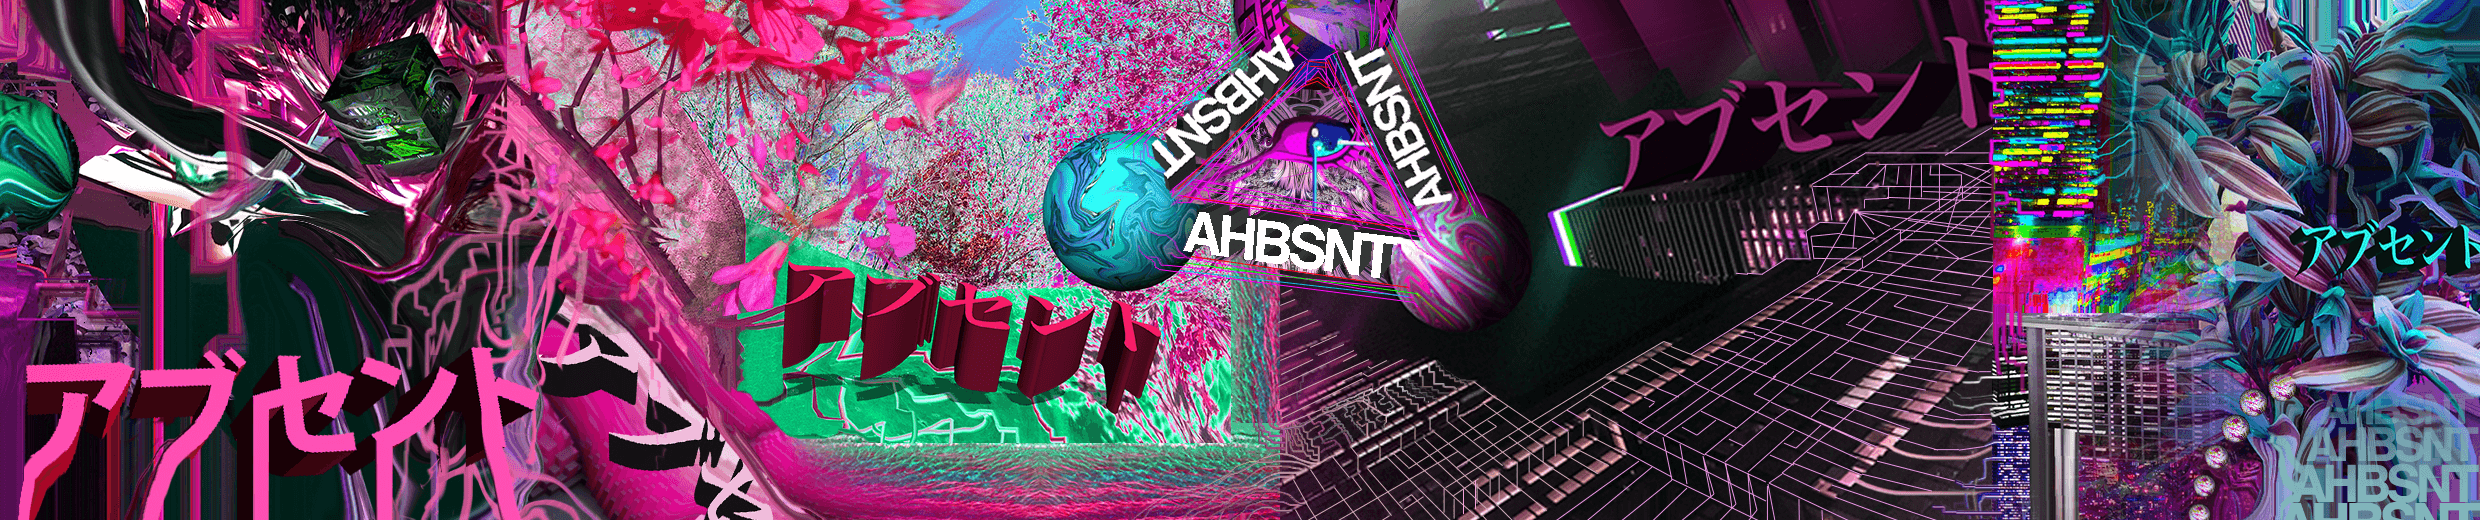 AHBSNT banner